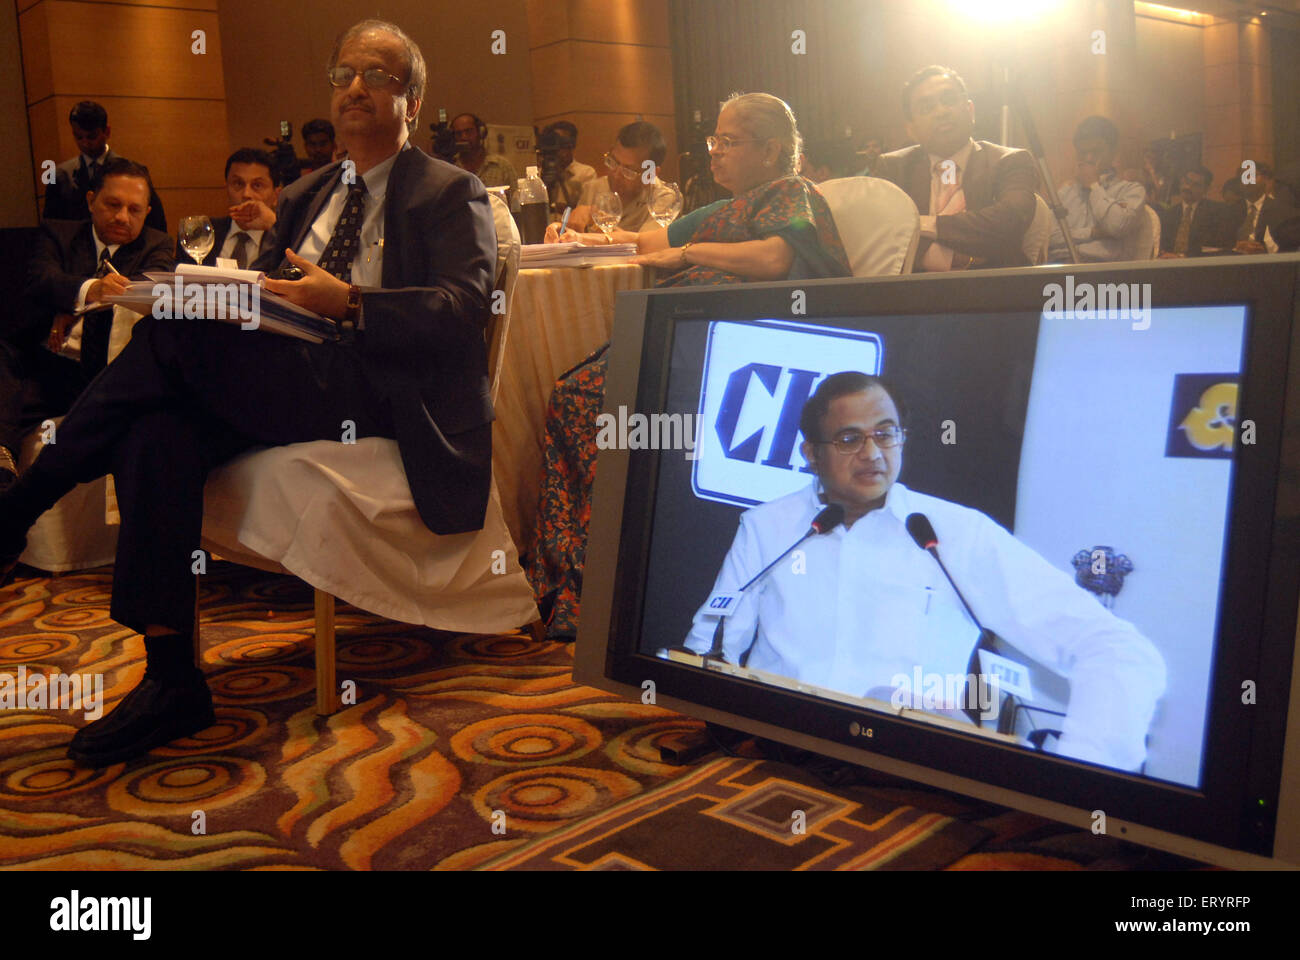 P. Chidambaram , speaking at CII , Palaniappan Chidambaram , Indian politician , attorney , Member of Parliament , Rajya Sabha , India , Asia Stock Photo